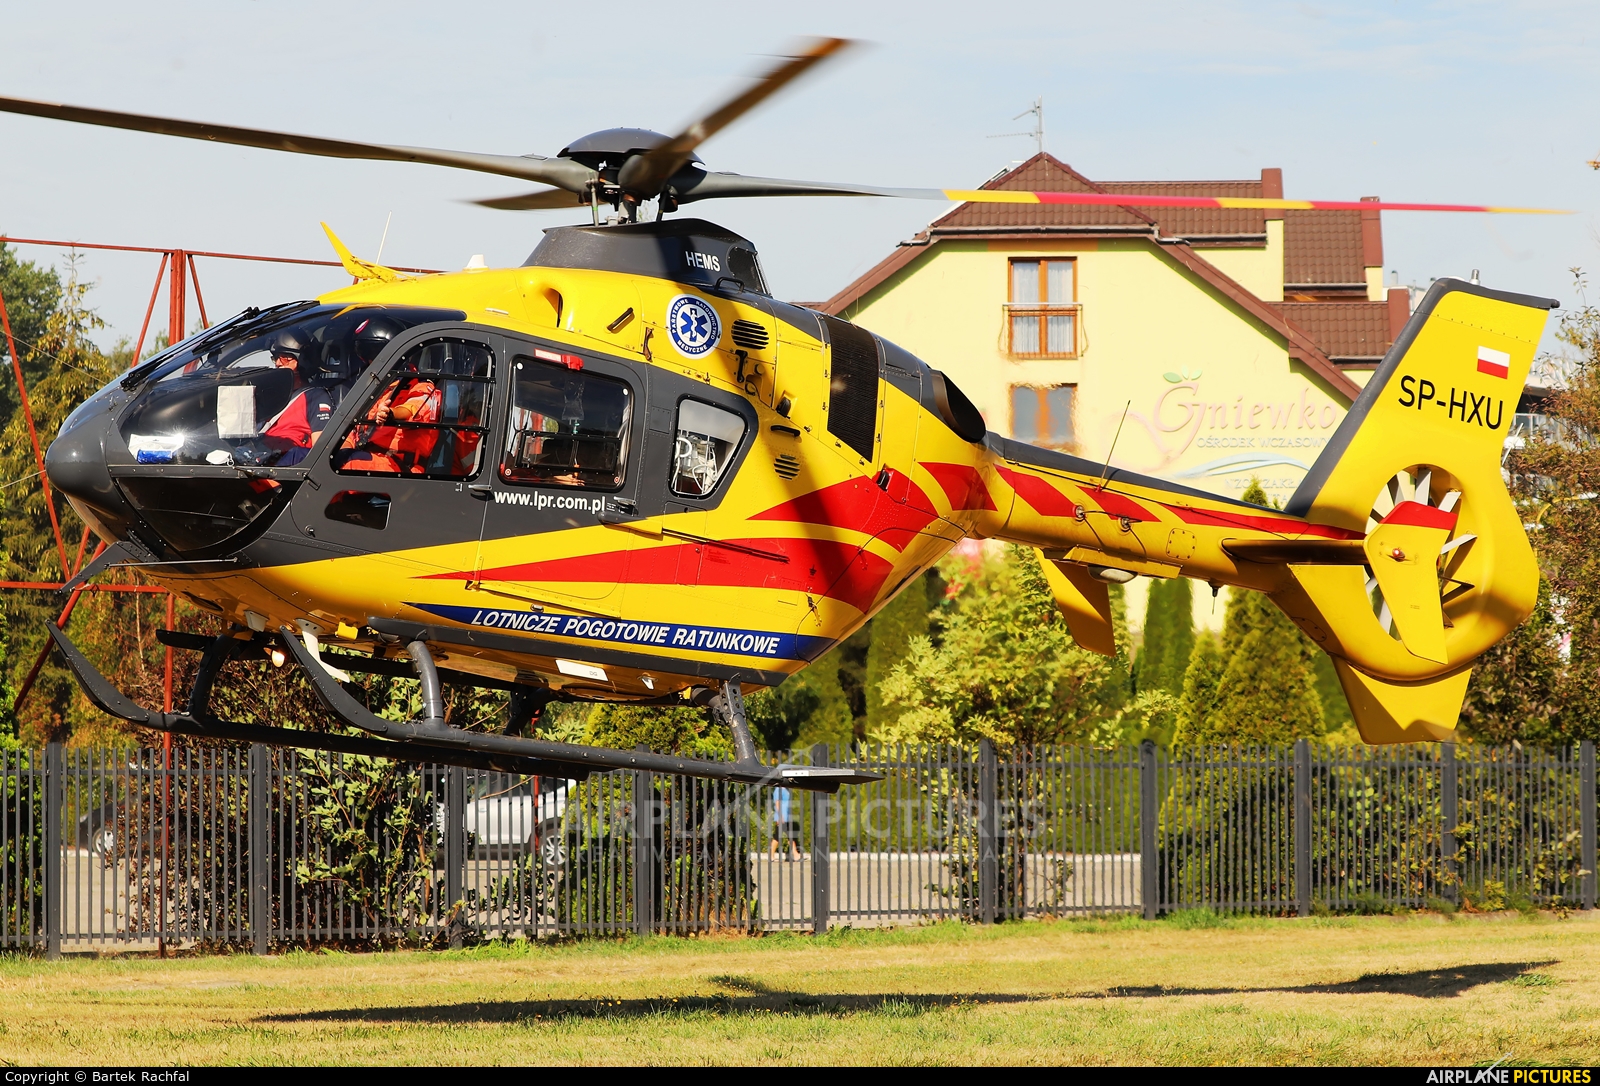 Polish Medical Air Rescue - Lotnicze Pogotowie Ratunkowe SP-HXU aircraft at Darłowo